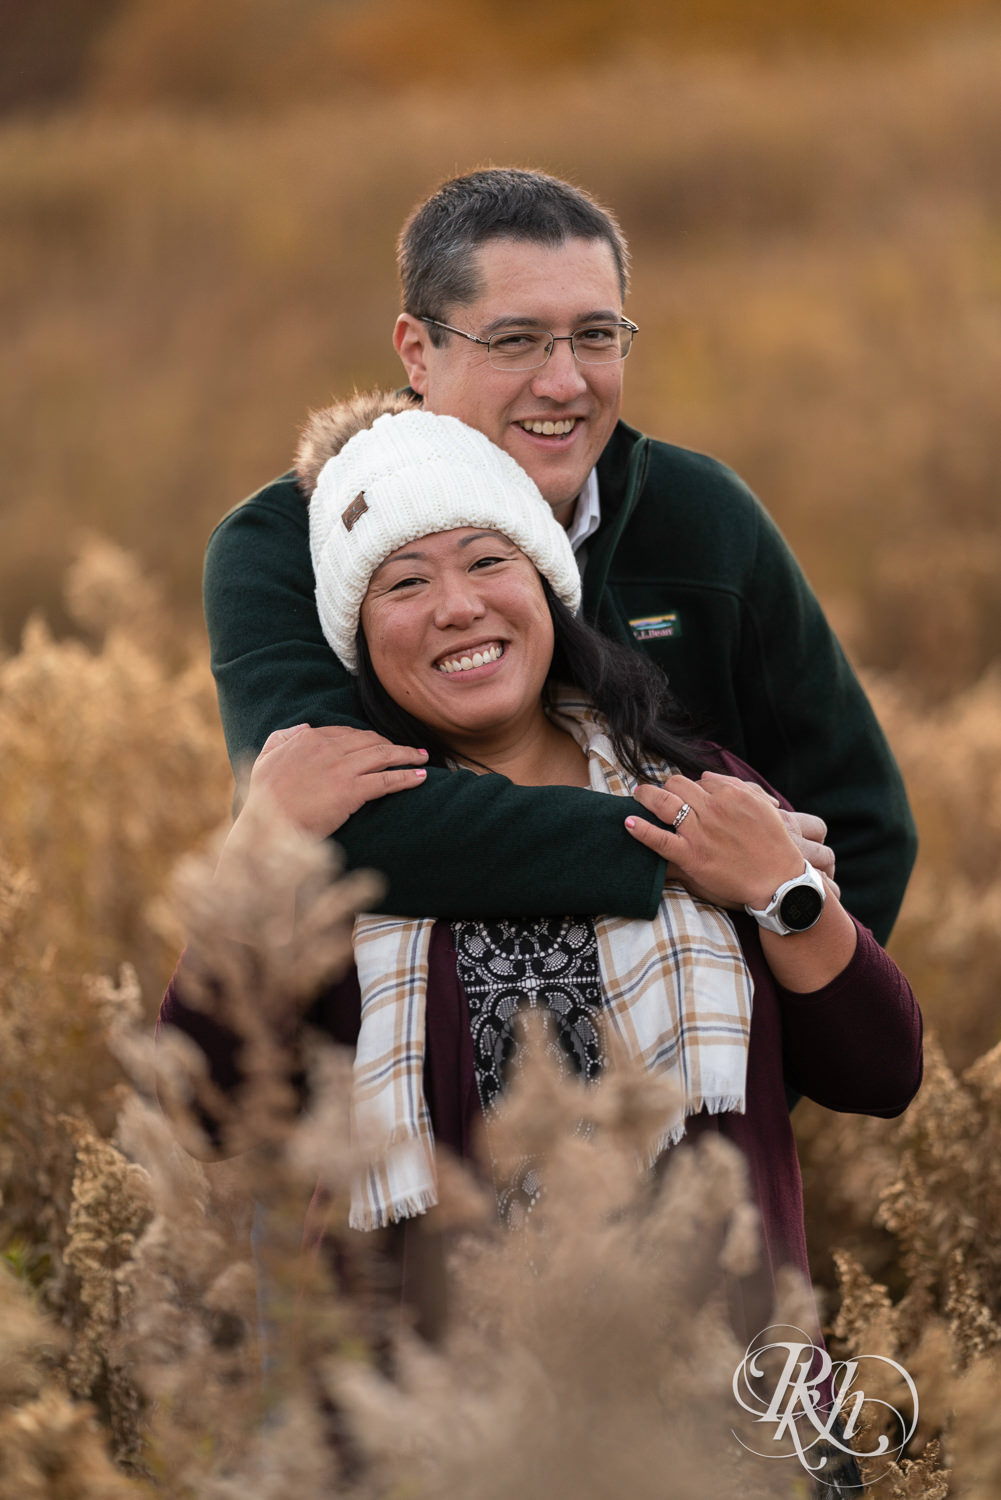 Man and Korean woman hug and laugh in field in fall colors at Lebanon Hills Regional Park in Eagan, Minnesota.